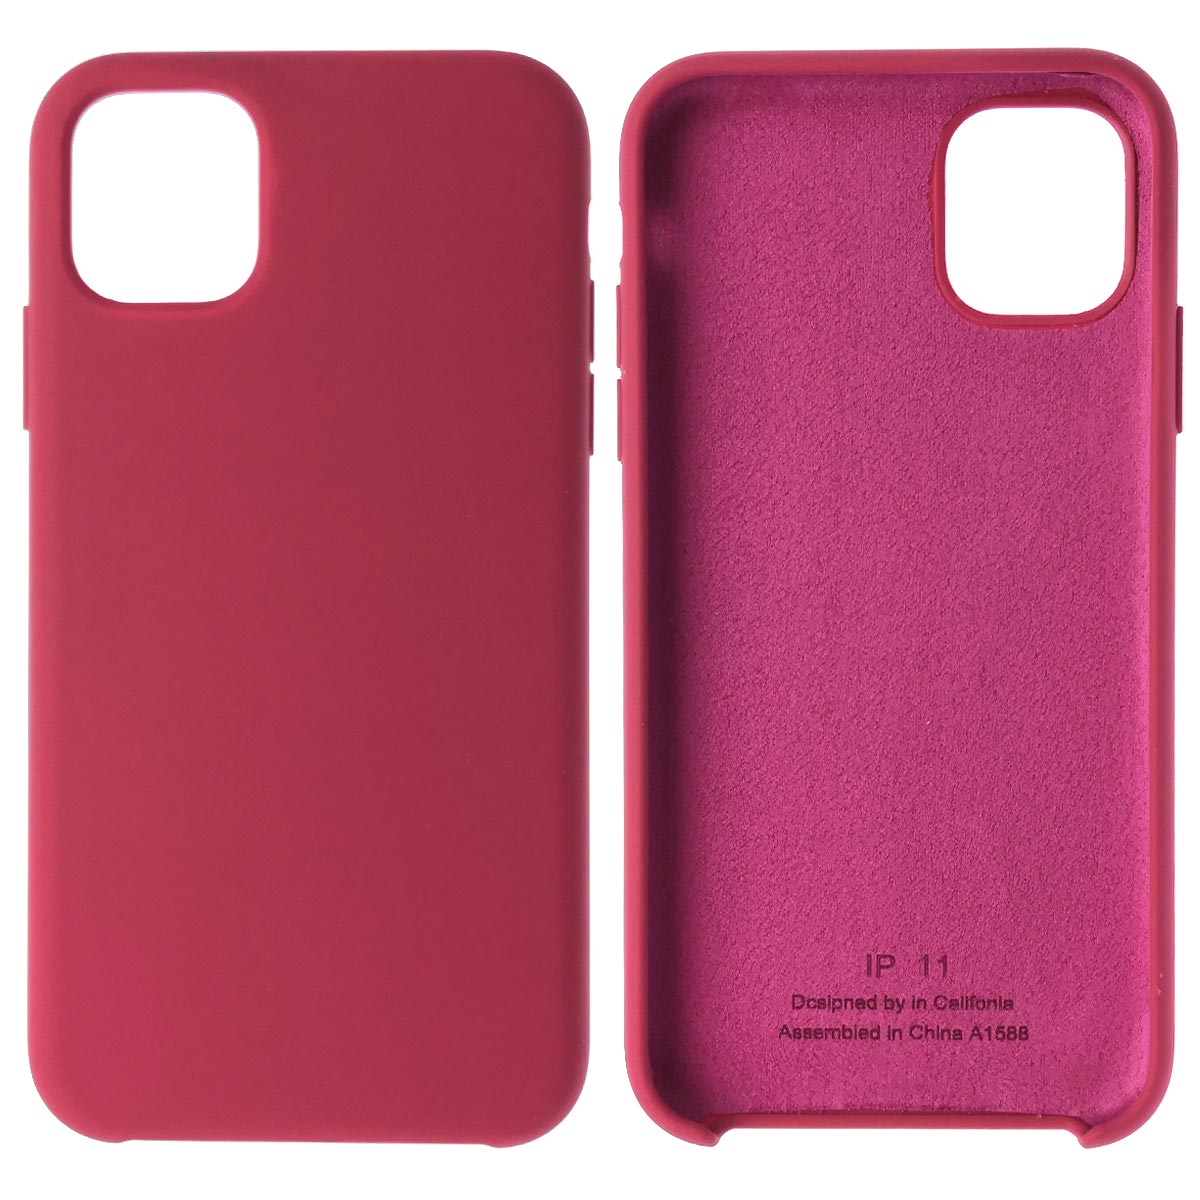 Чехол накладка Silicon Case для APPLE iPhone 11 2019, силикон, бархат, цвет лиловый